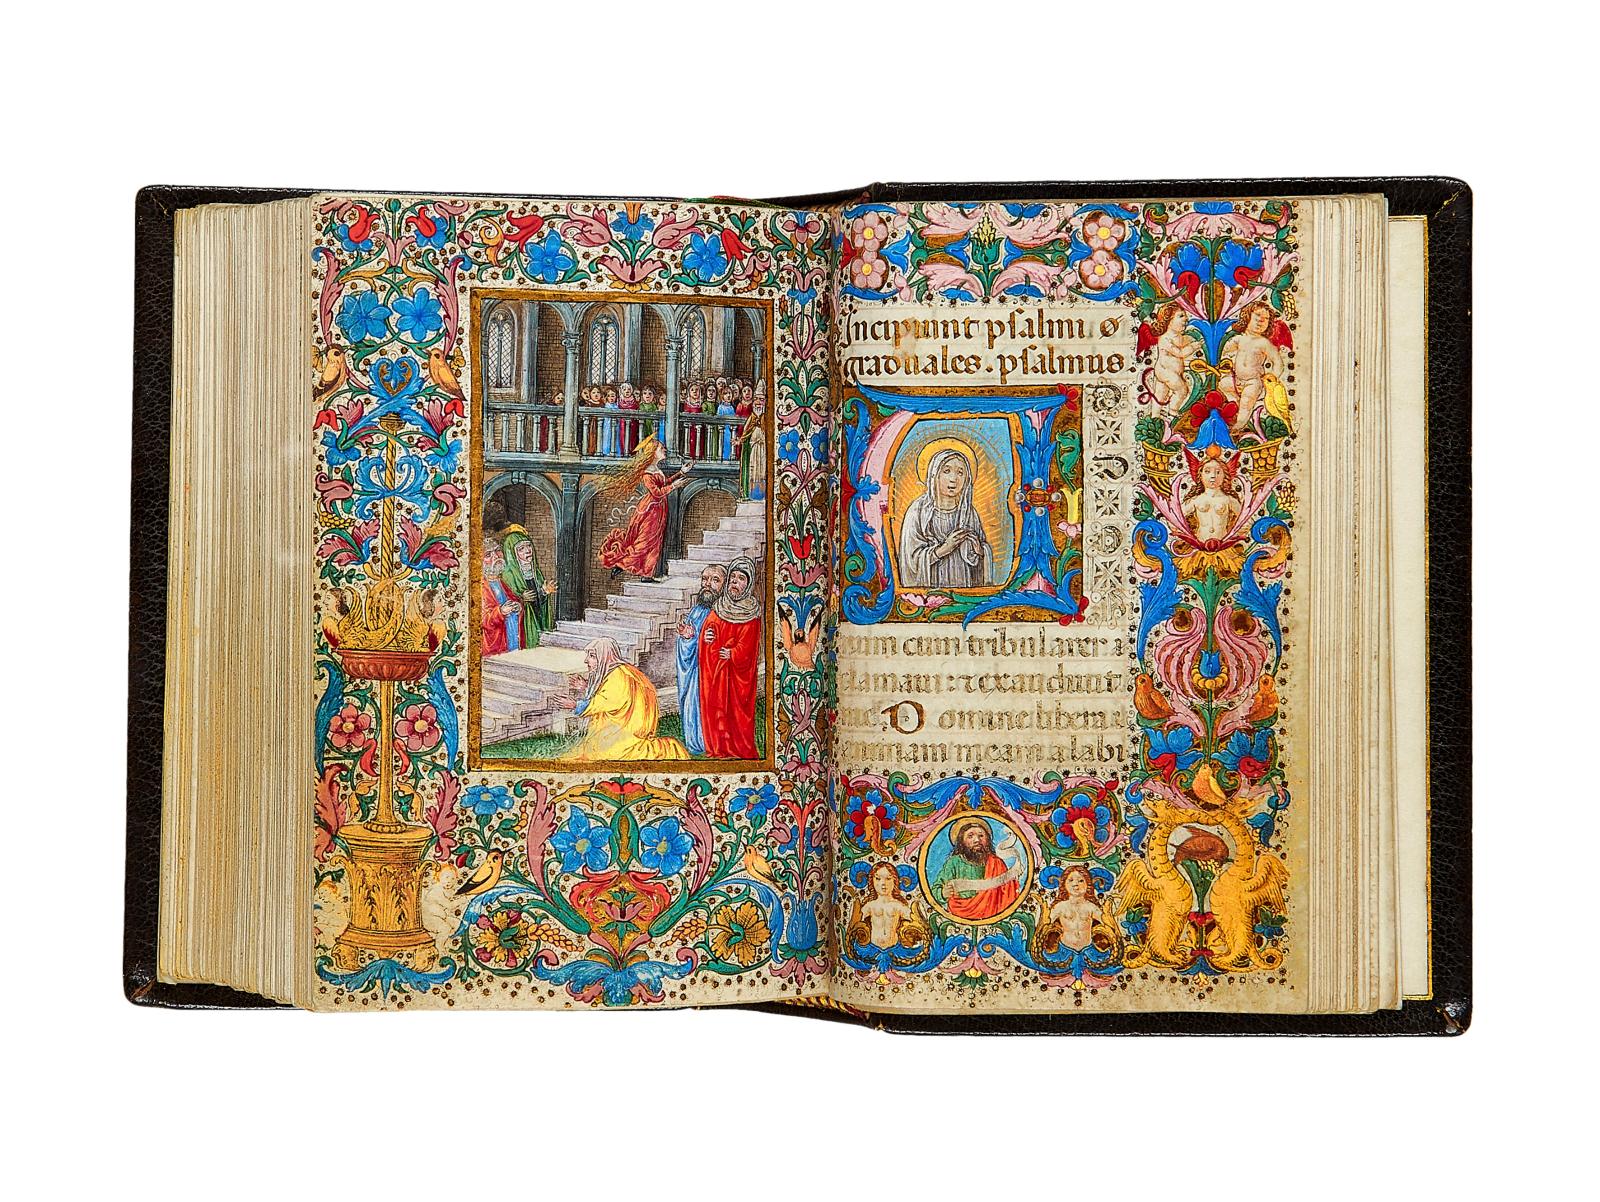 ﻿Isabelle d'Este's Book of Hours